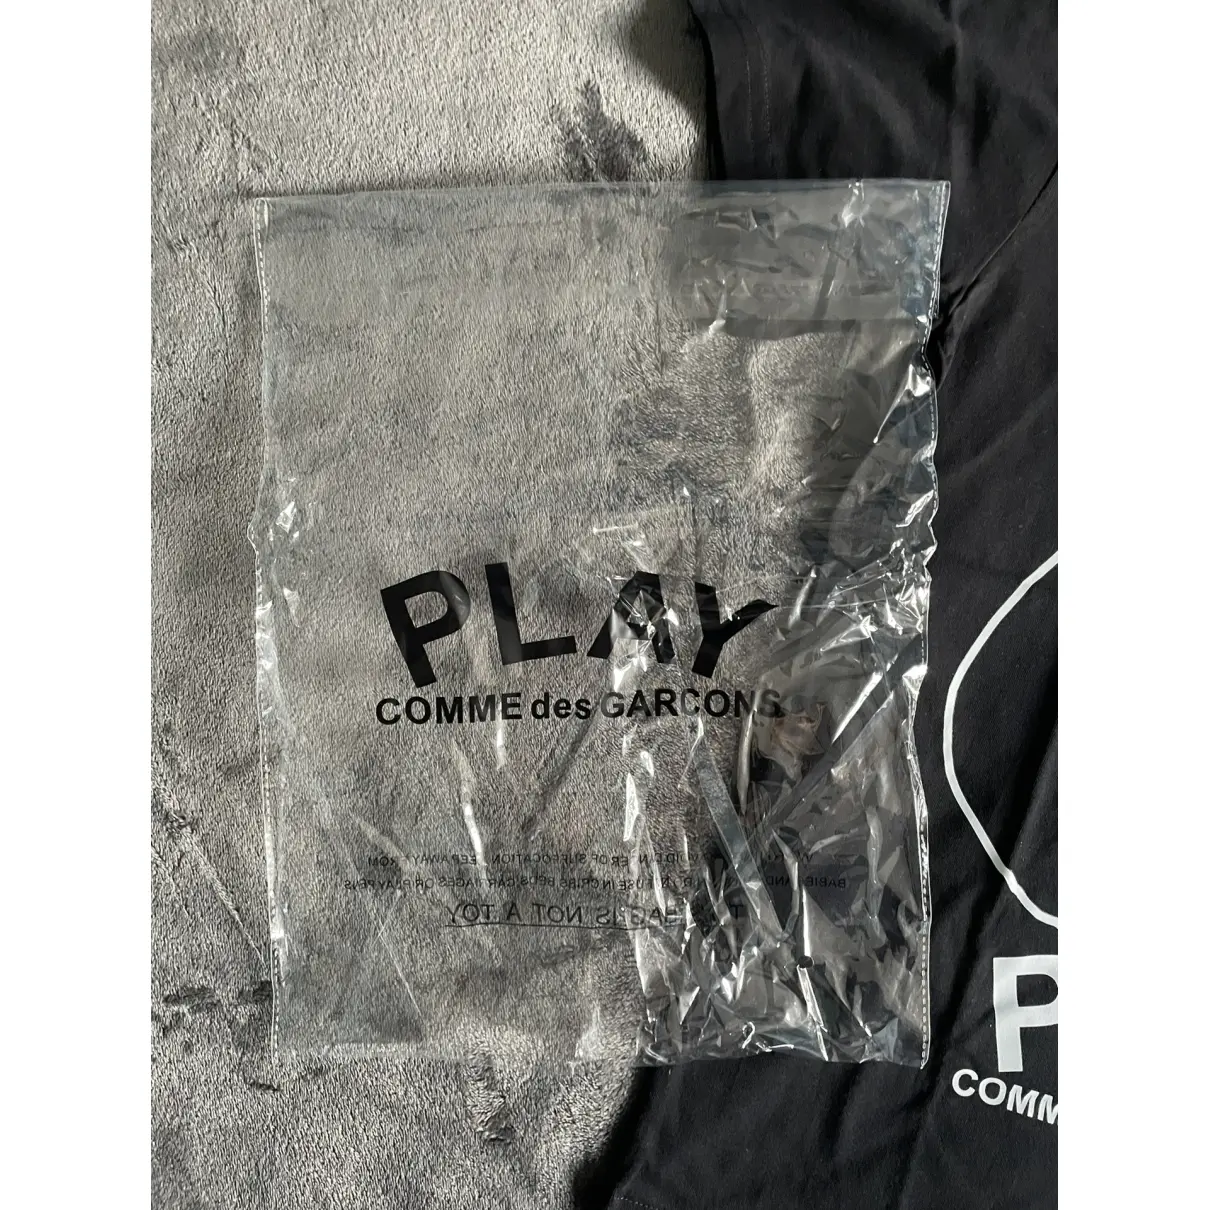 Buy Play Comme des Garçons T-shirt online